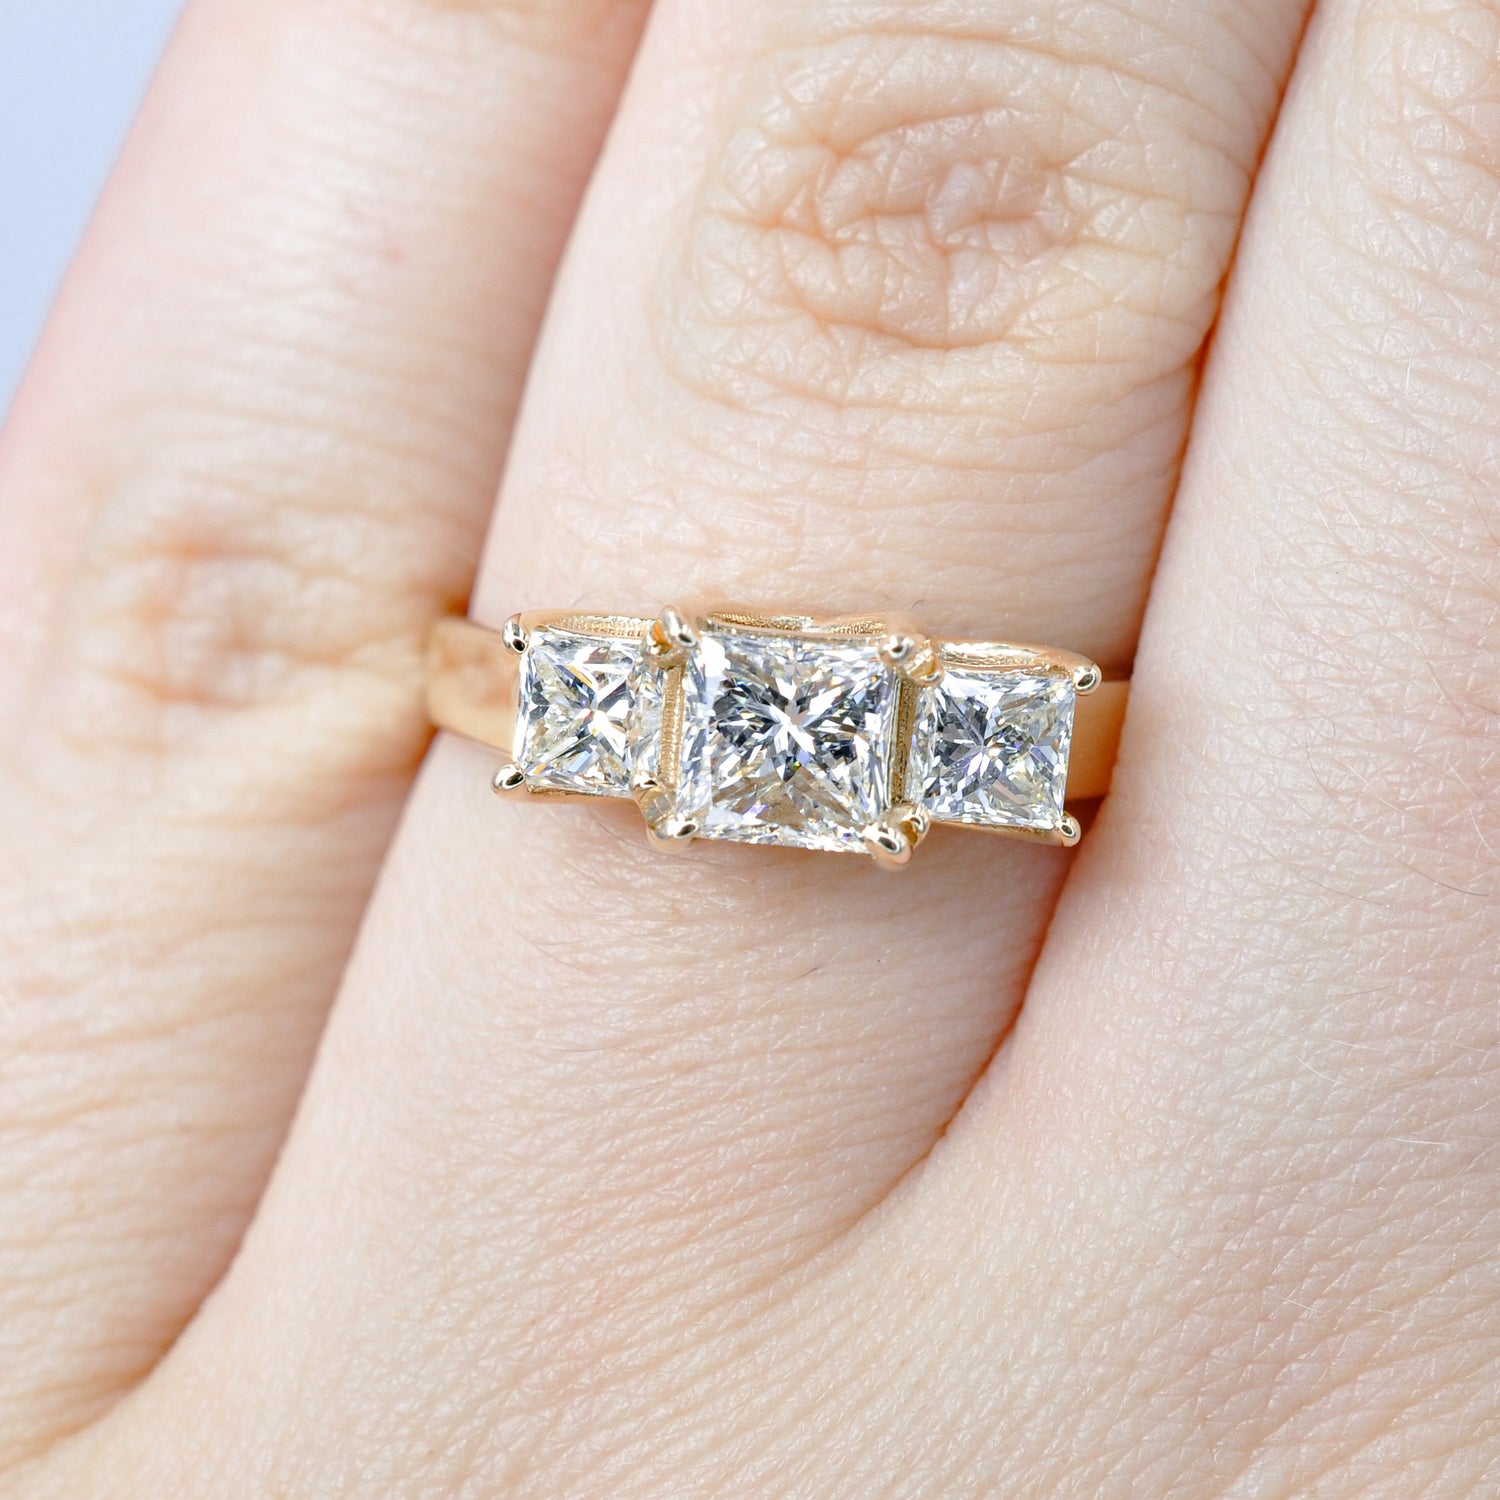 Alluring 1.50 CT Princess Cut Diamond Three Stone Ring in 14KT Yellow Gold